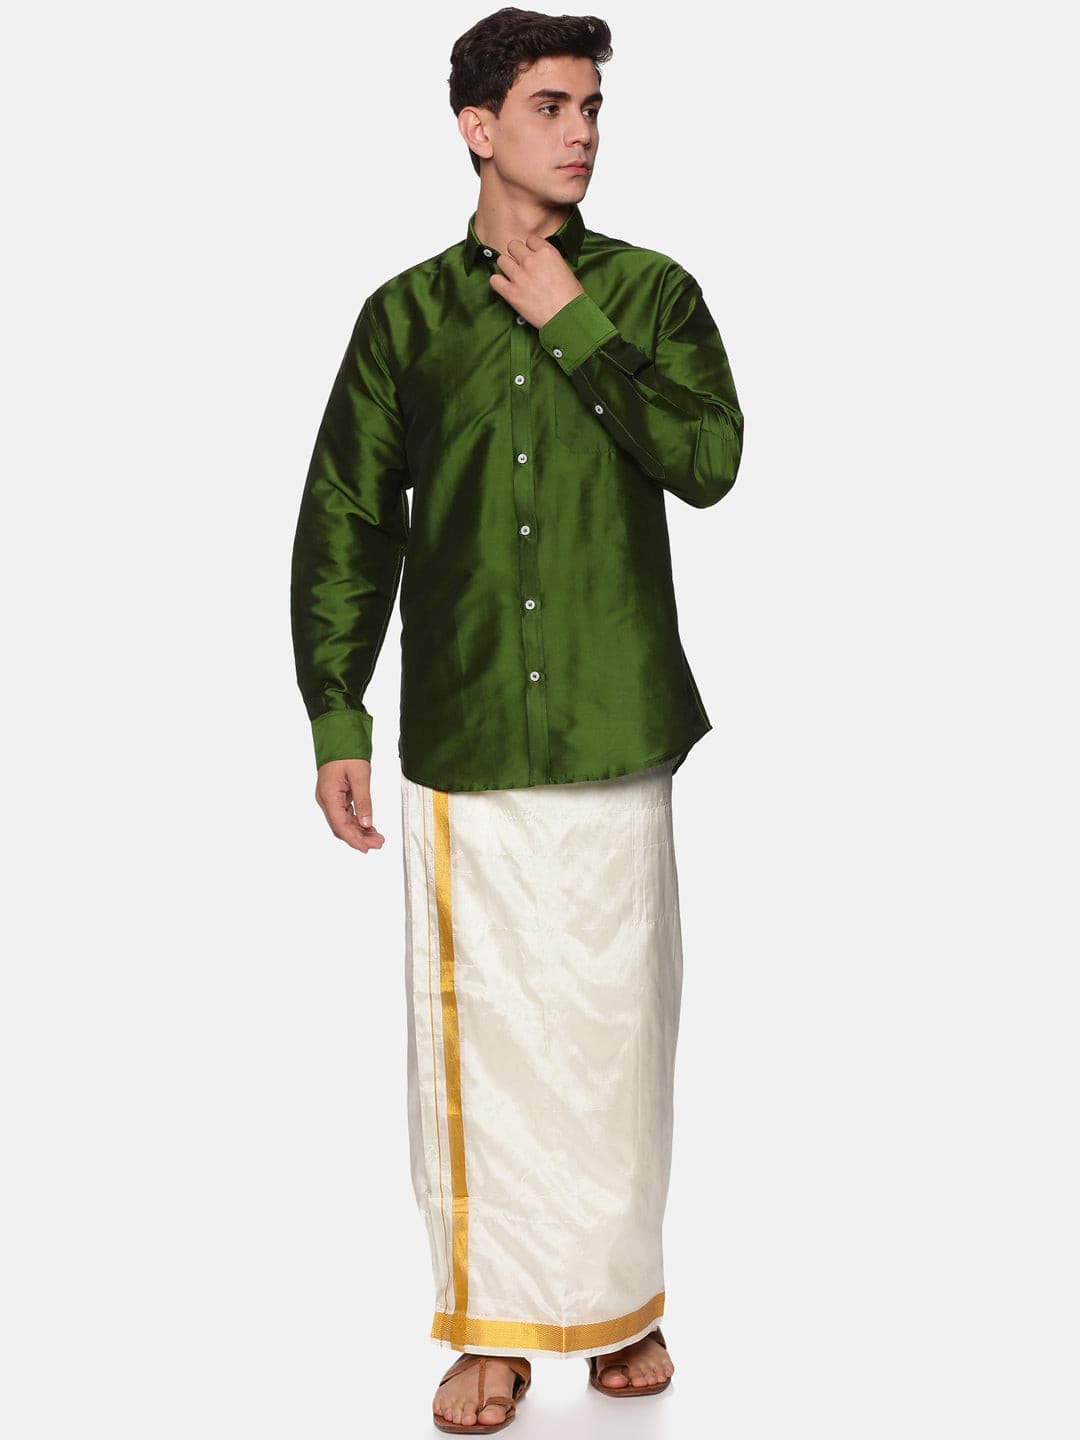 Men Solid Green Colour Full Sleeve Shirt Pocket Dhoti Angavastram Set.